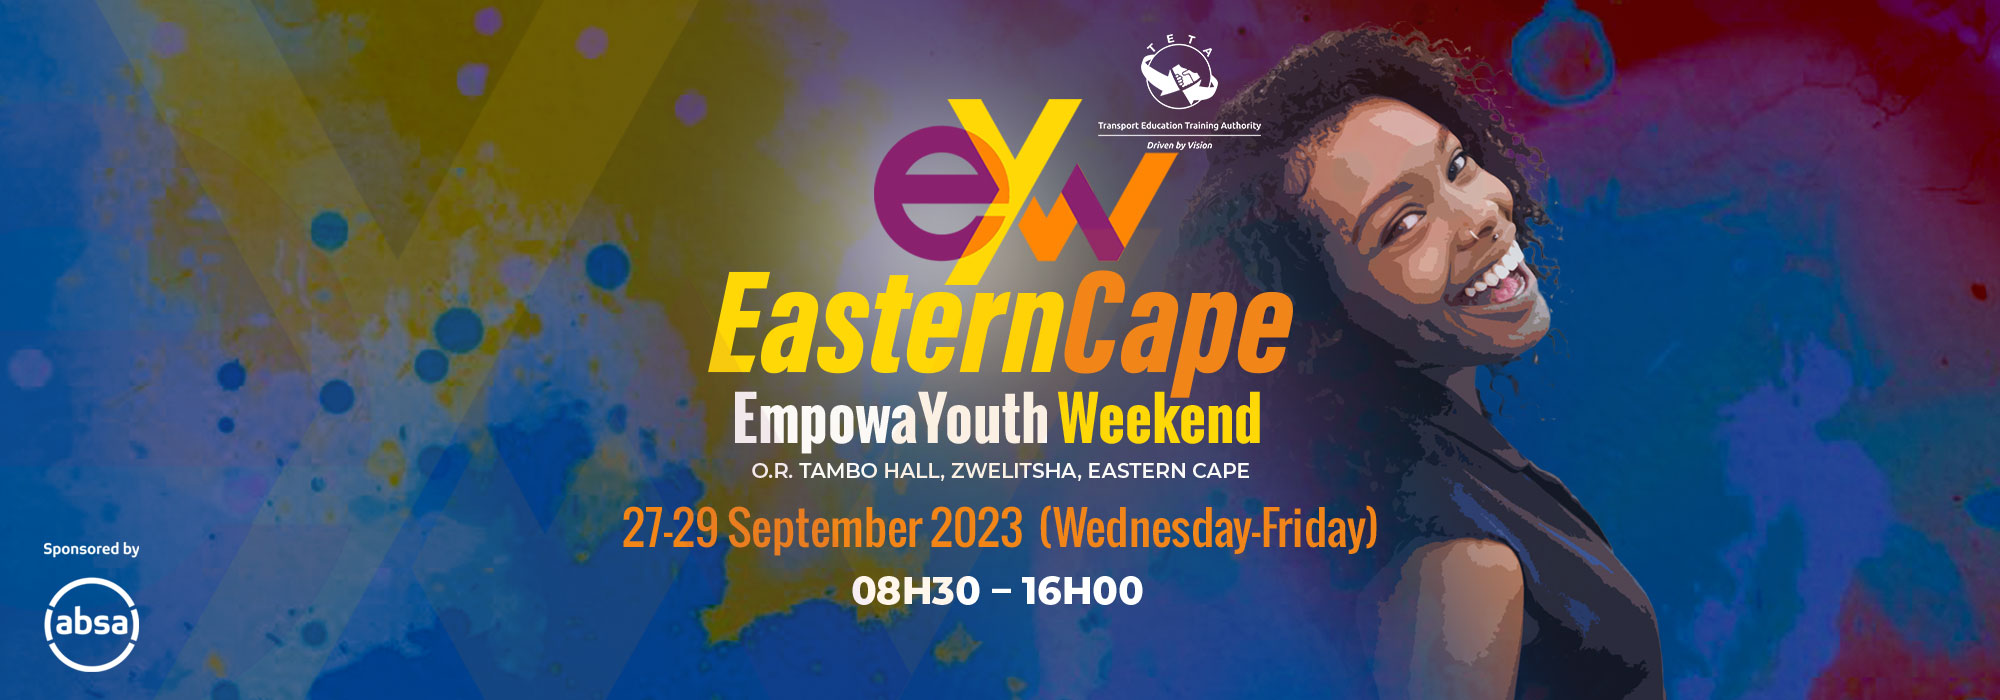 TETA Empowayouth Weekend Eastern Cape